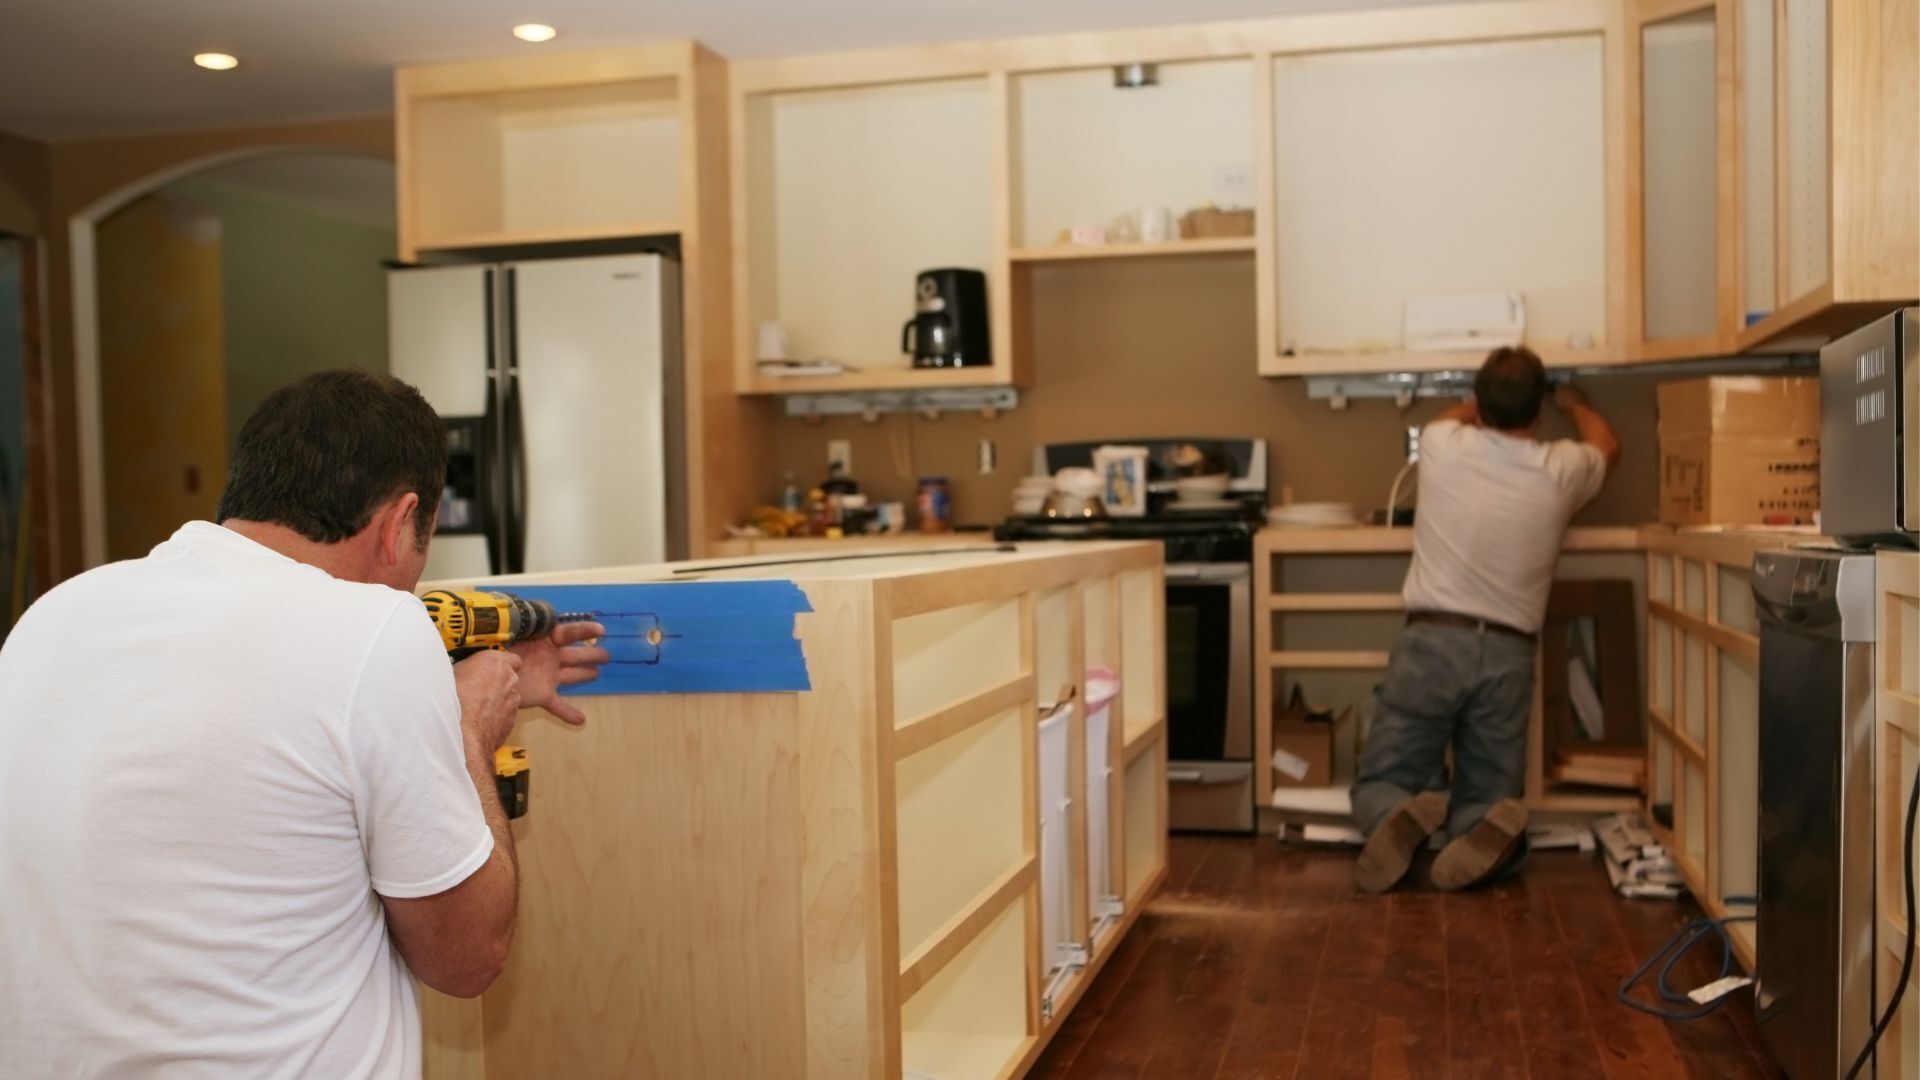 kitchen remodeler working on kitchen renovation project